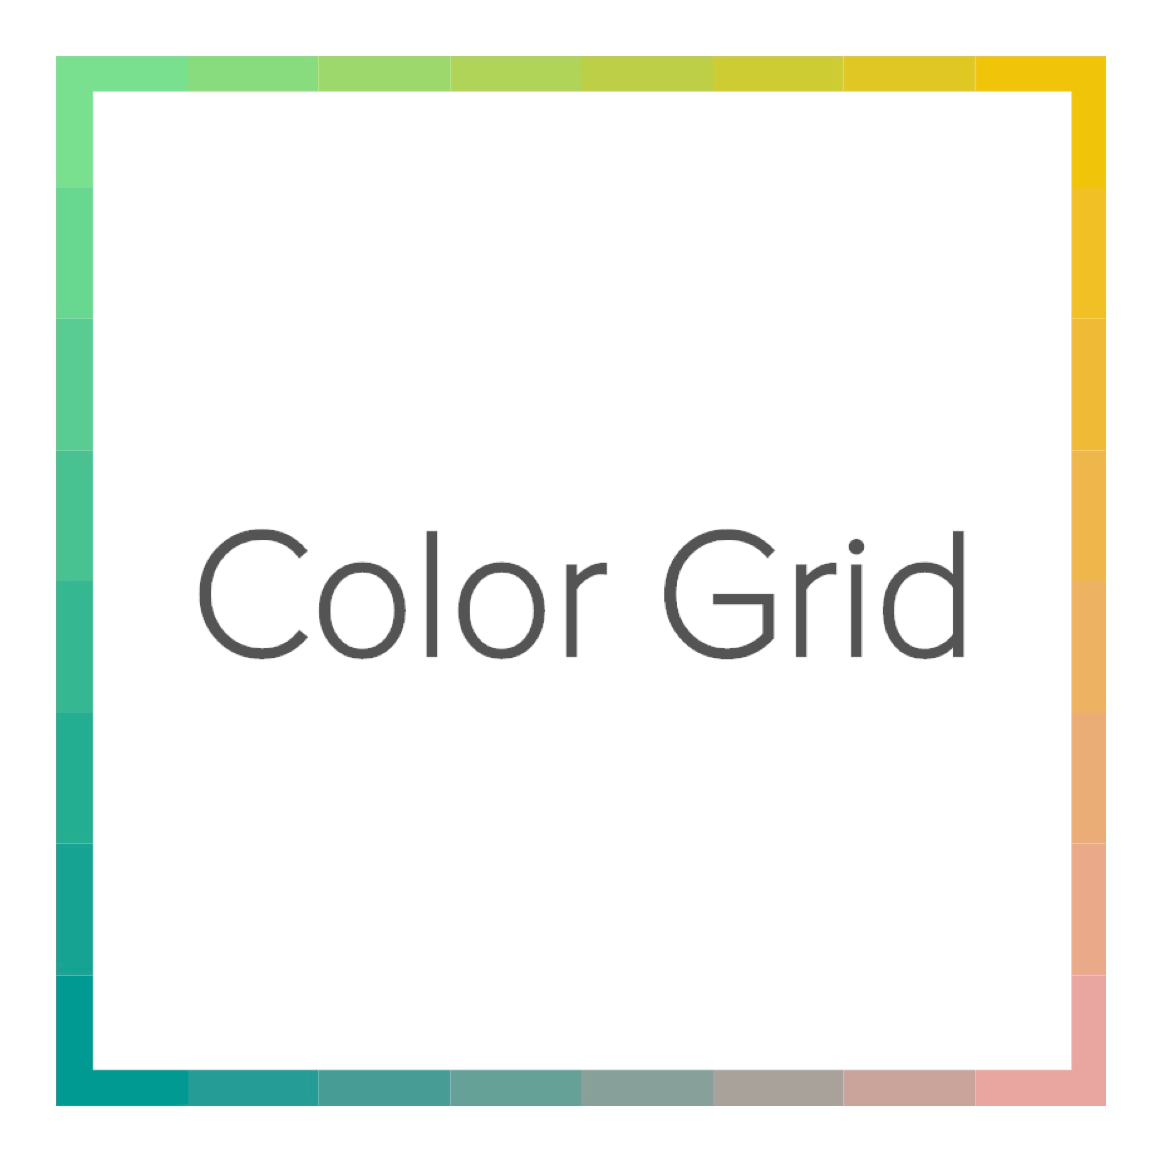 Color Grid app